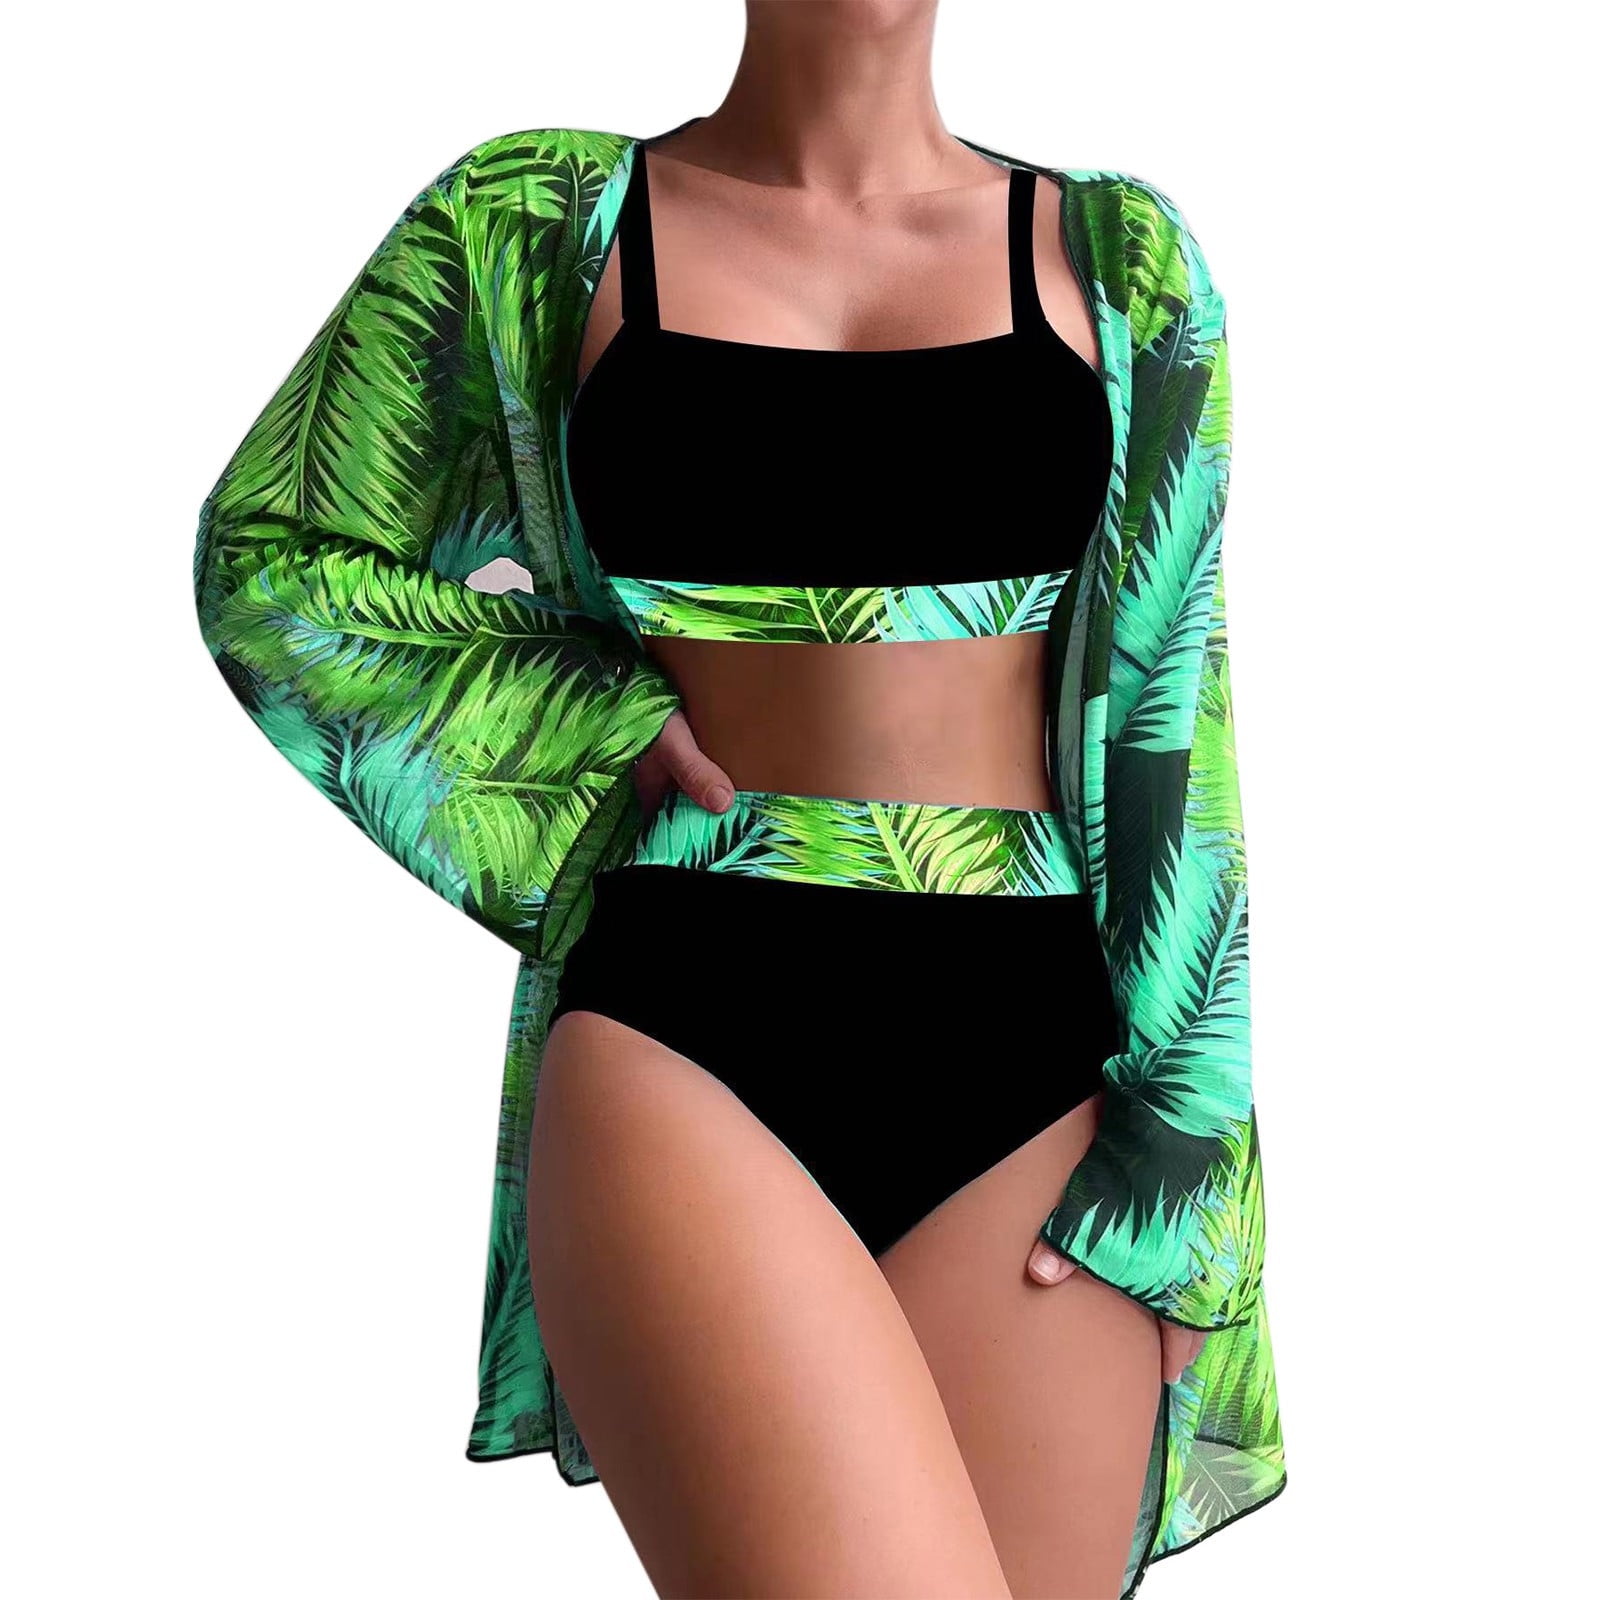 Akiihool Plus Size Swimsuit For Women Swimsuits for Women Tankini Teen  Bathing Suit Tummy Control Modest Swimwear with Boy Shorts (Black,XL) 